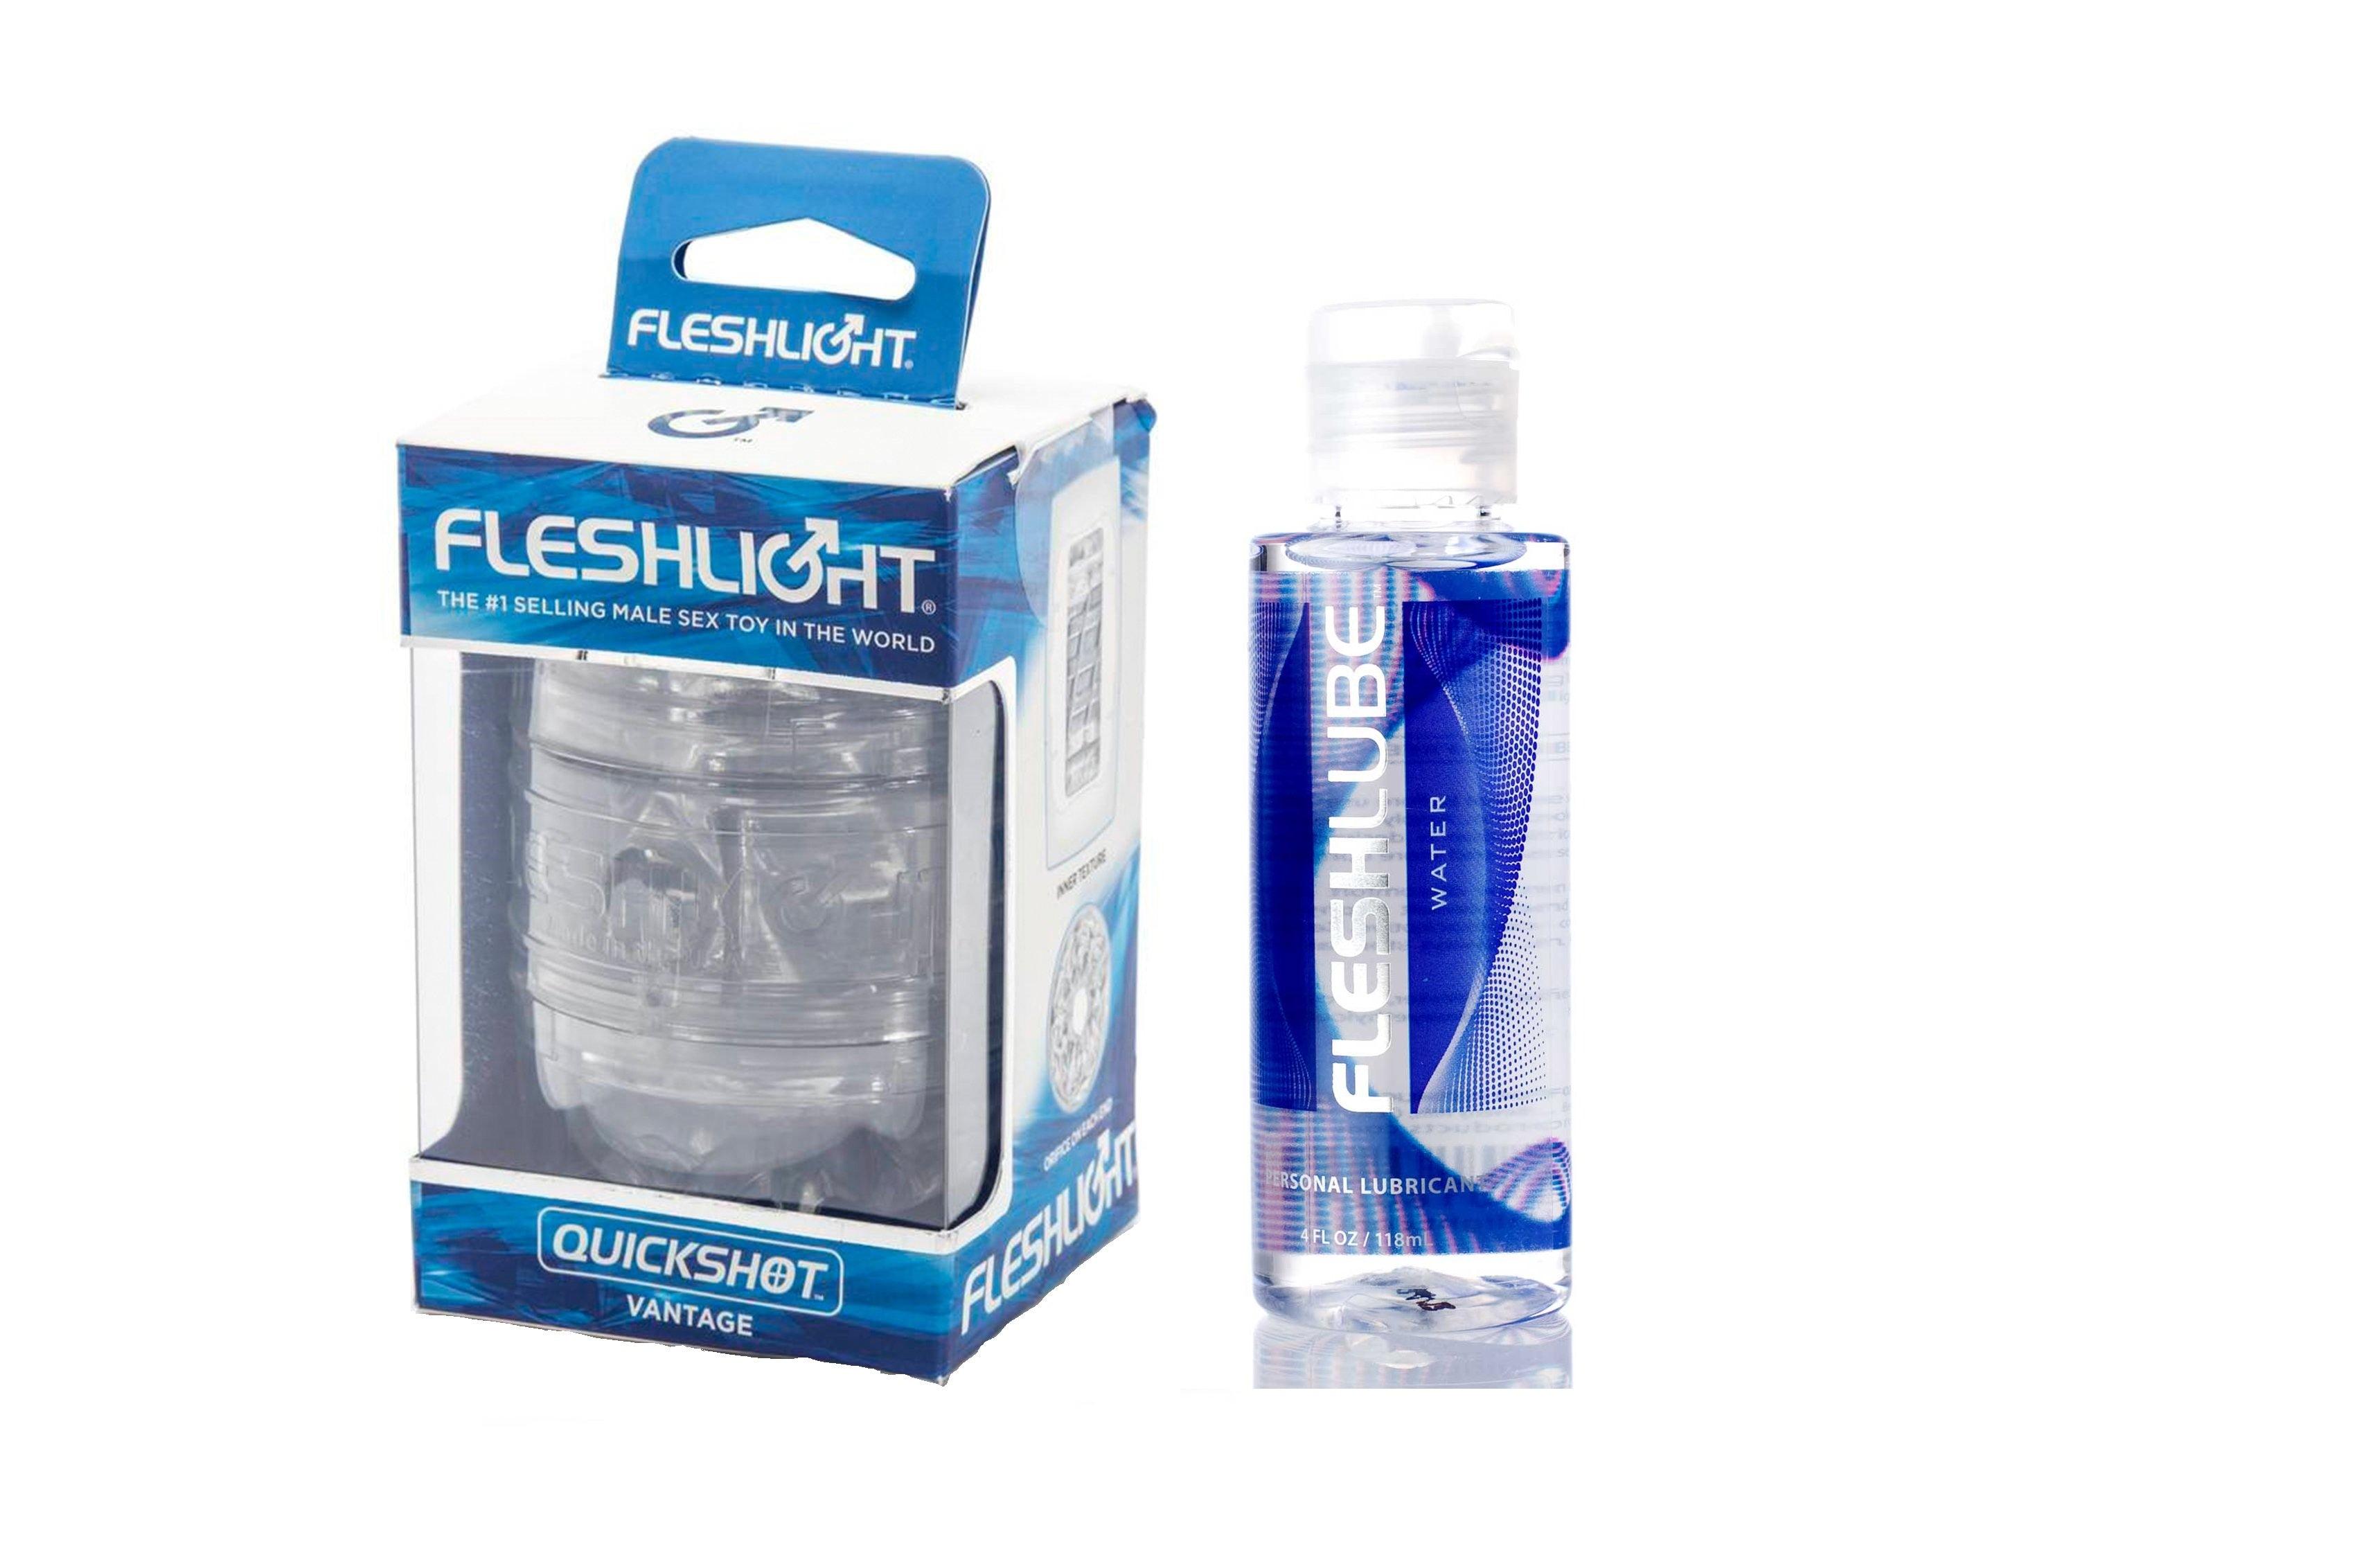 Fleshlight Quickshot Vantage - Buy At Luxury Toy X - Free 3-Day Shipping